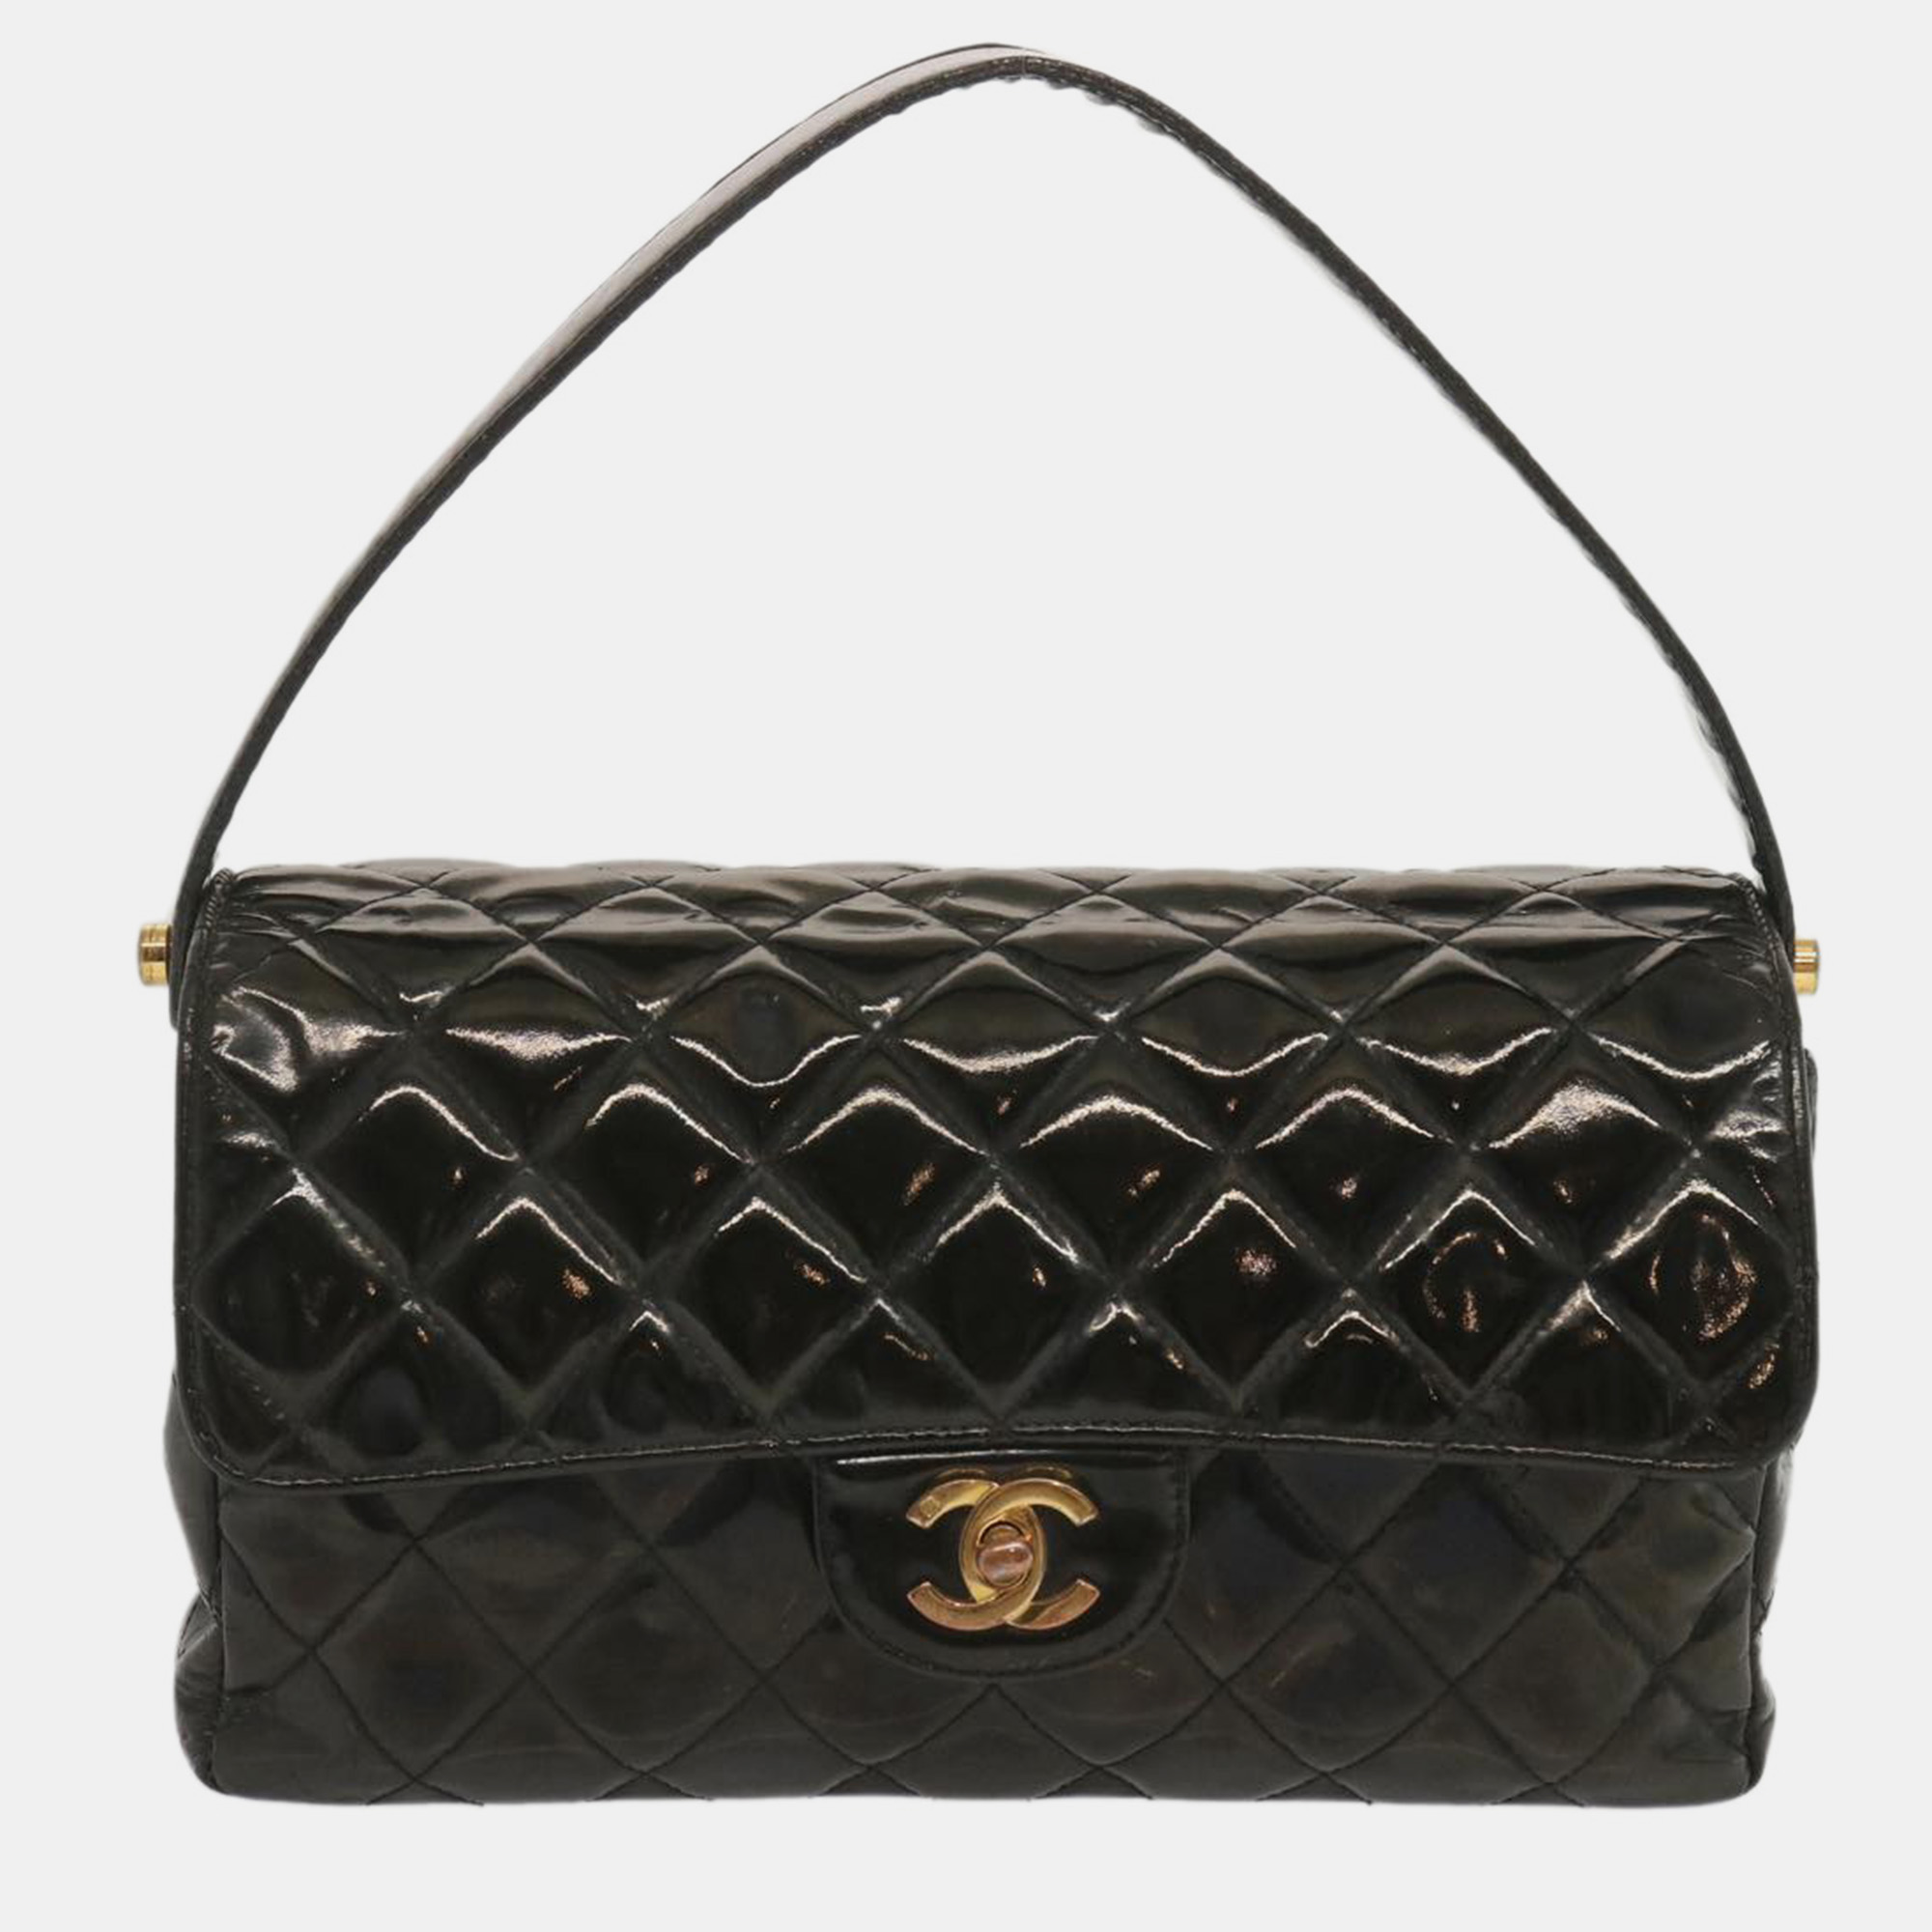 Chanel black patent leather handbag